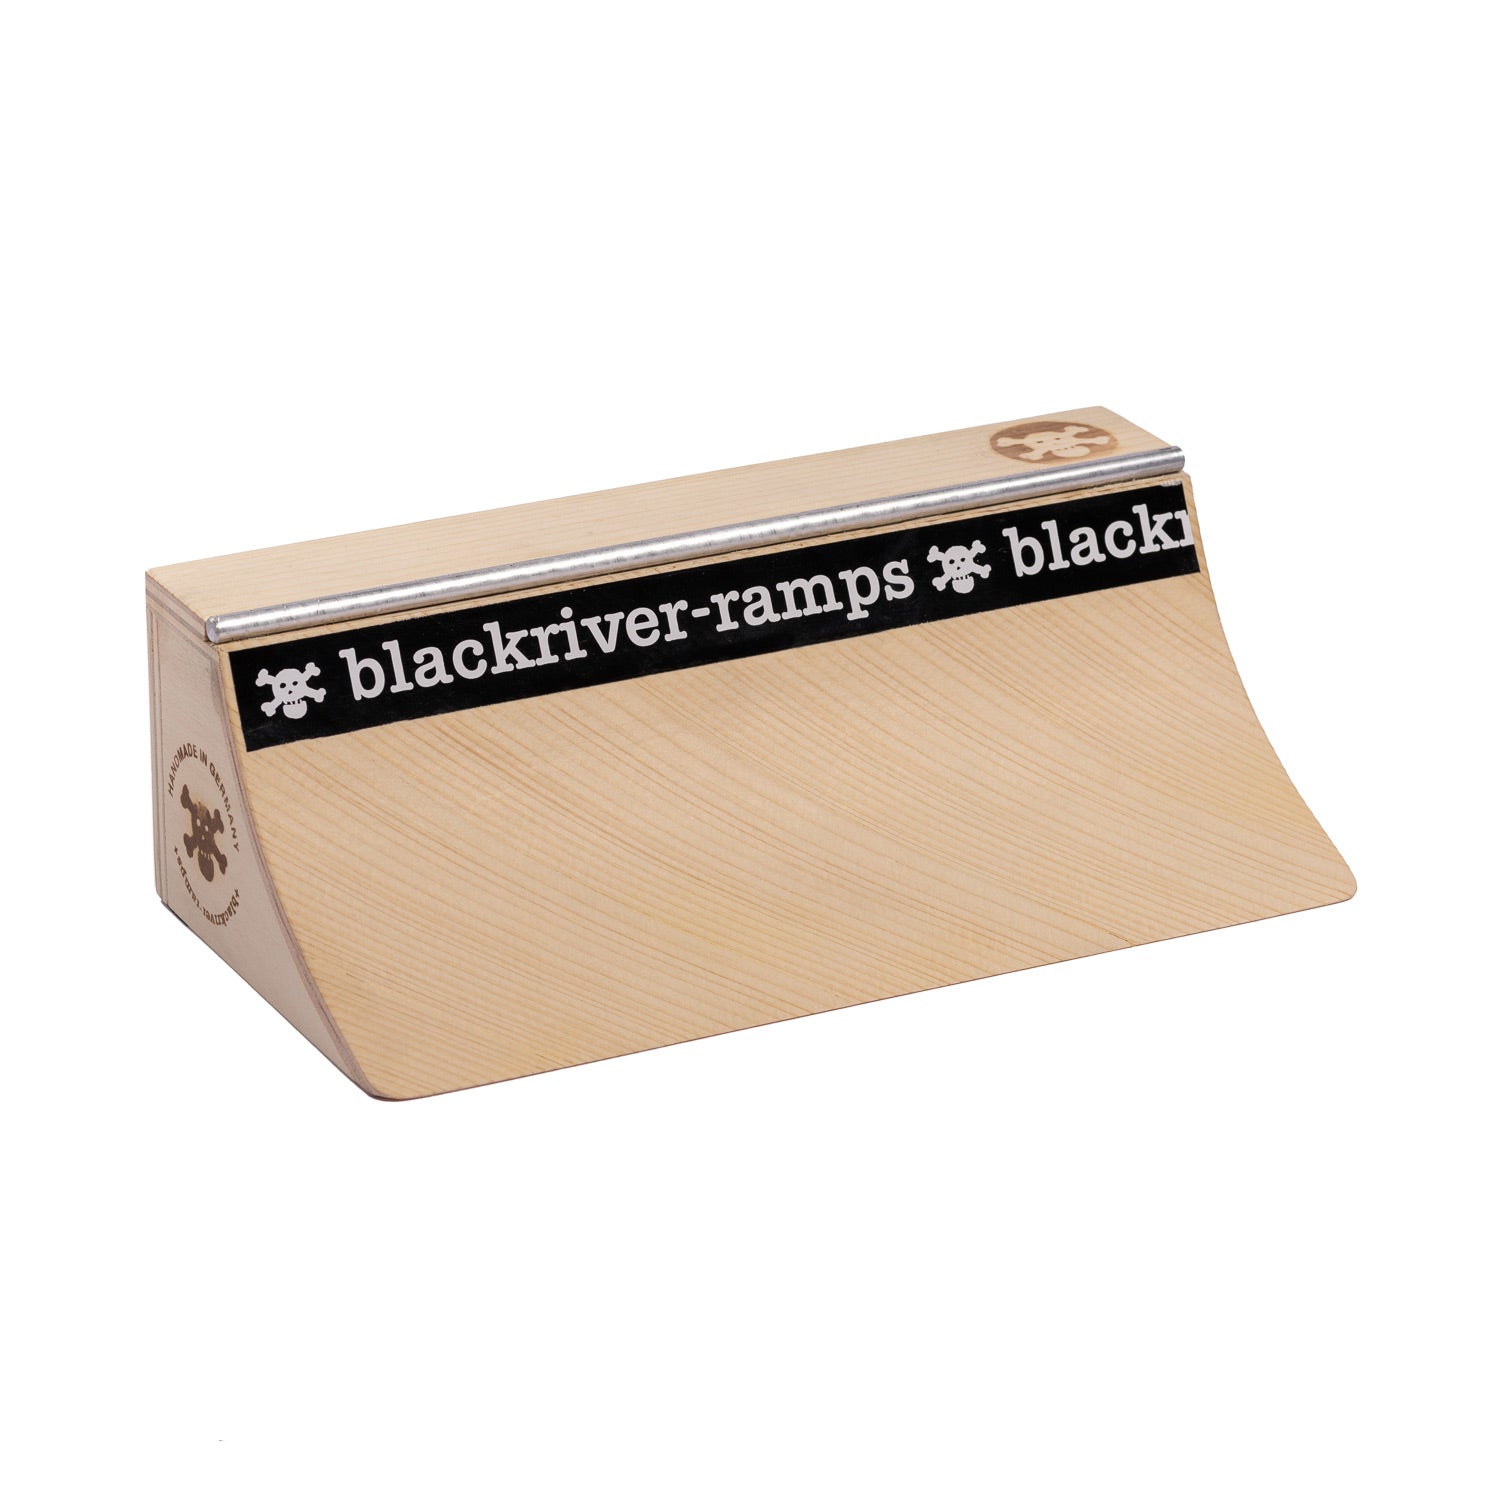 Blackriver ramps - Pocket Quarter XL Standard Coping